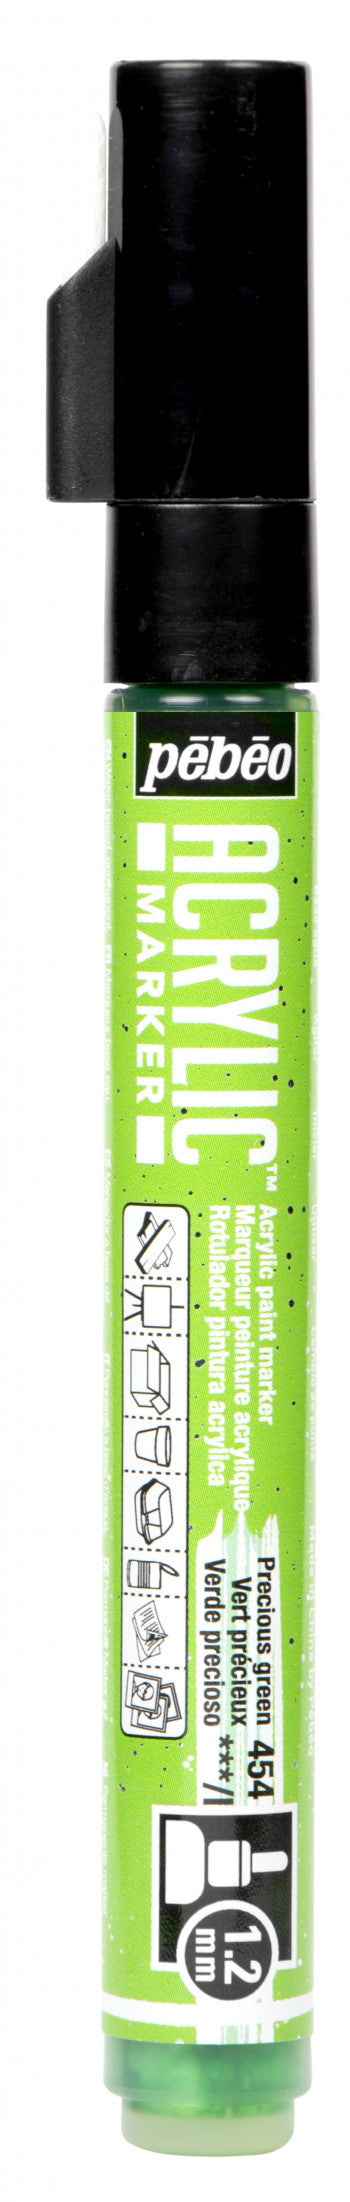 Acrylic Marker 1.2mm Pebeo Precious green - 454